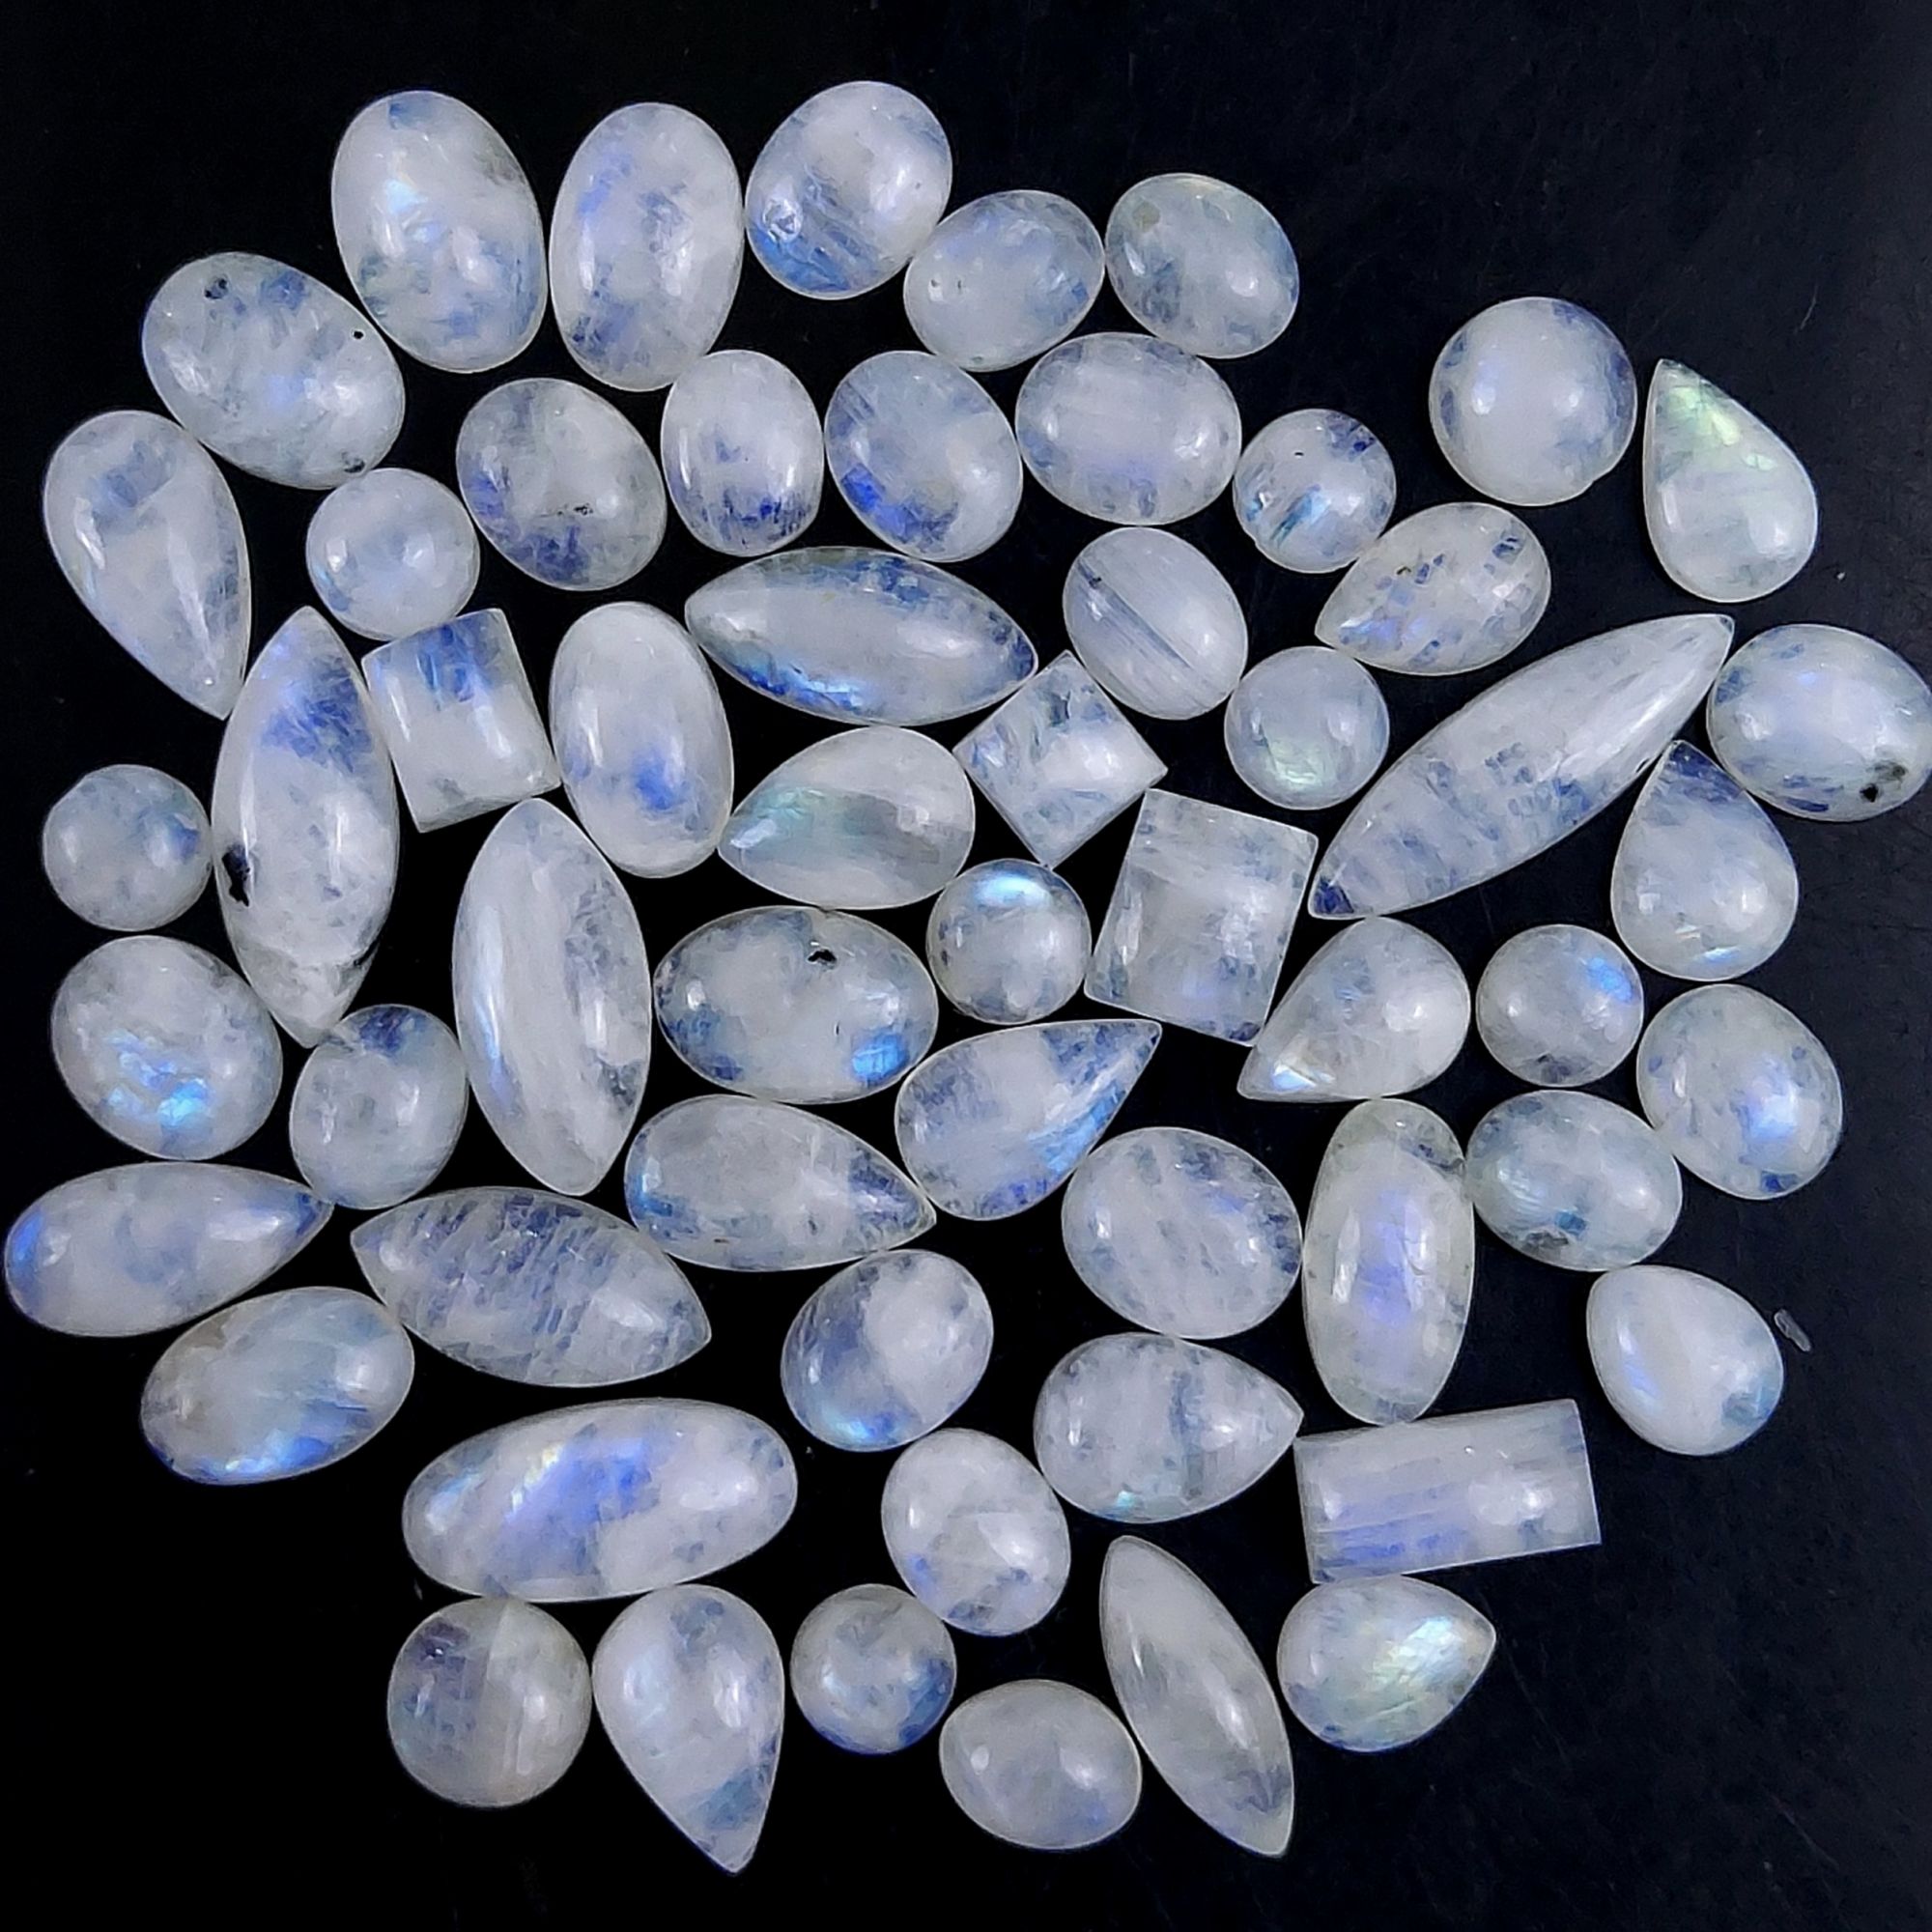 57Pcs 236Cts Natural Rainbow Cabochon Gemstone For Jewelry Making Crystal Cabochon Semi-Precious Rainbow Moonstone Flat Back Gemstone Lot 245x7 7x7mm#723